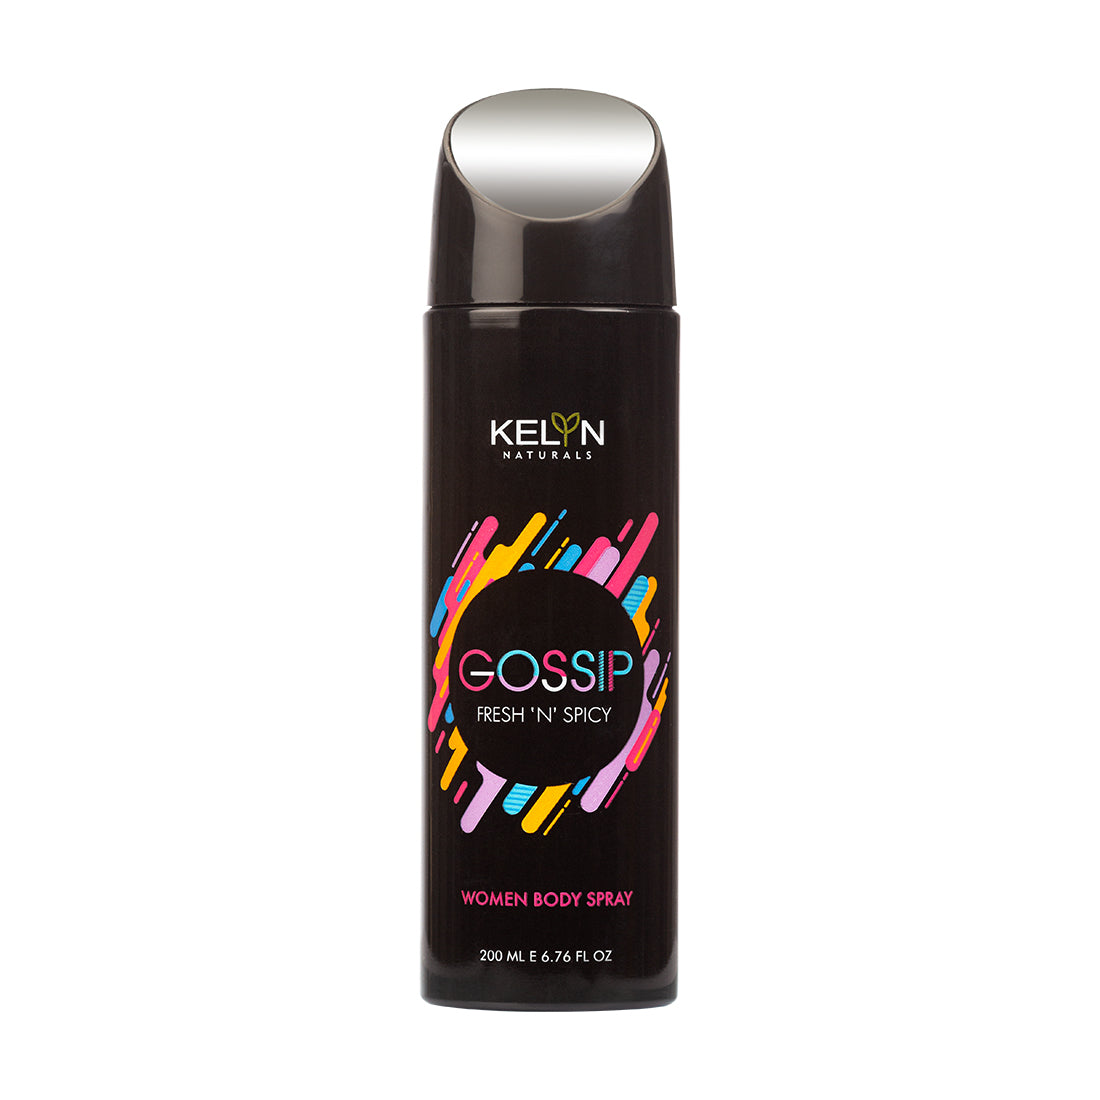 Gossip Deodorant for Women Body Spray, 200 ml